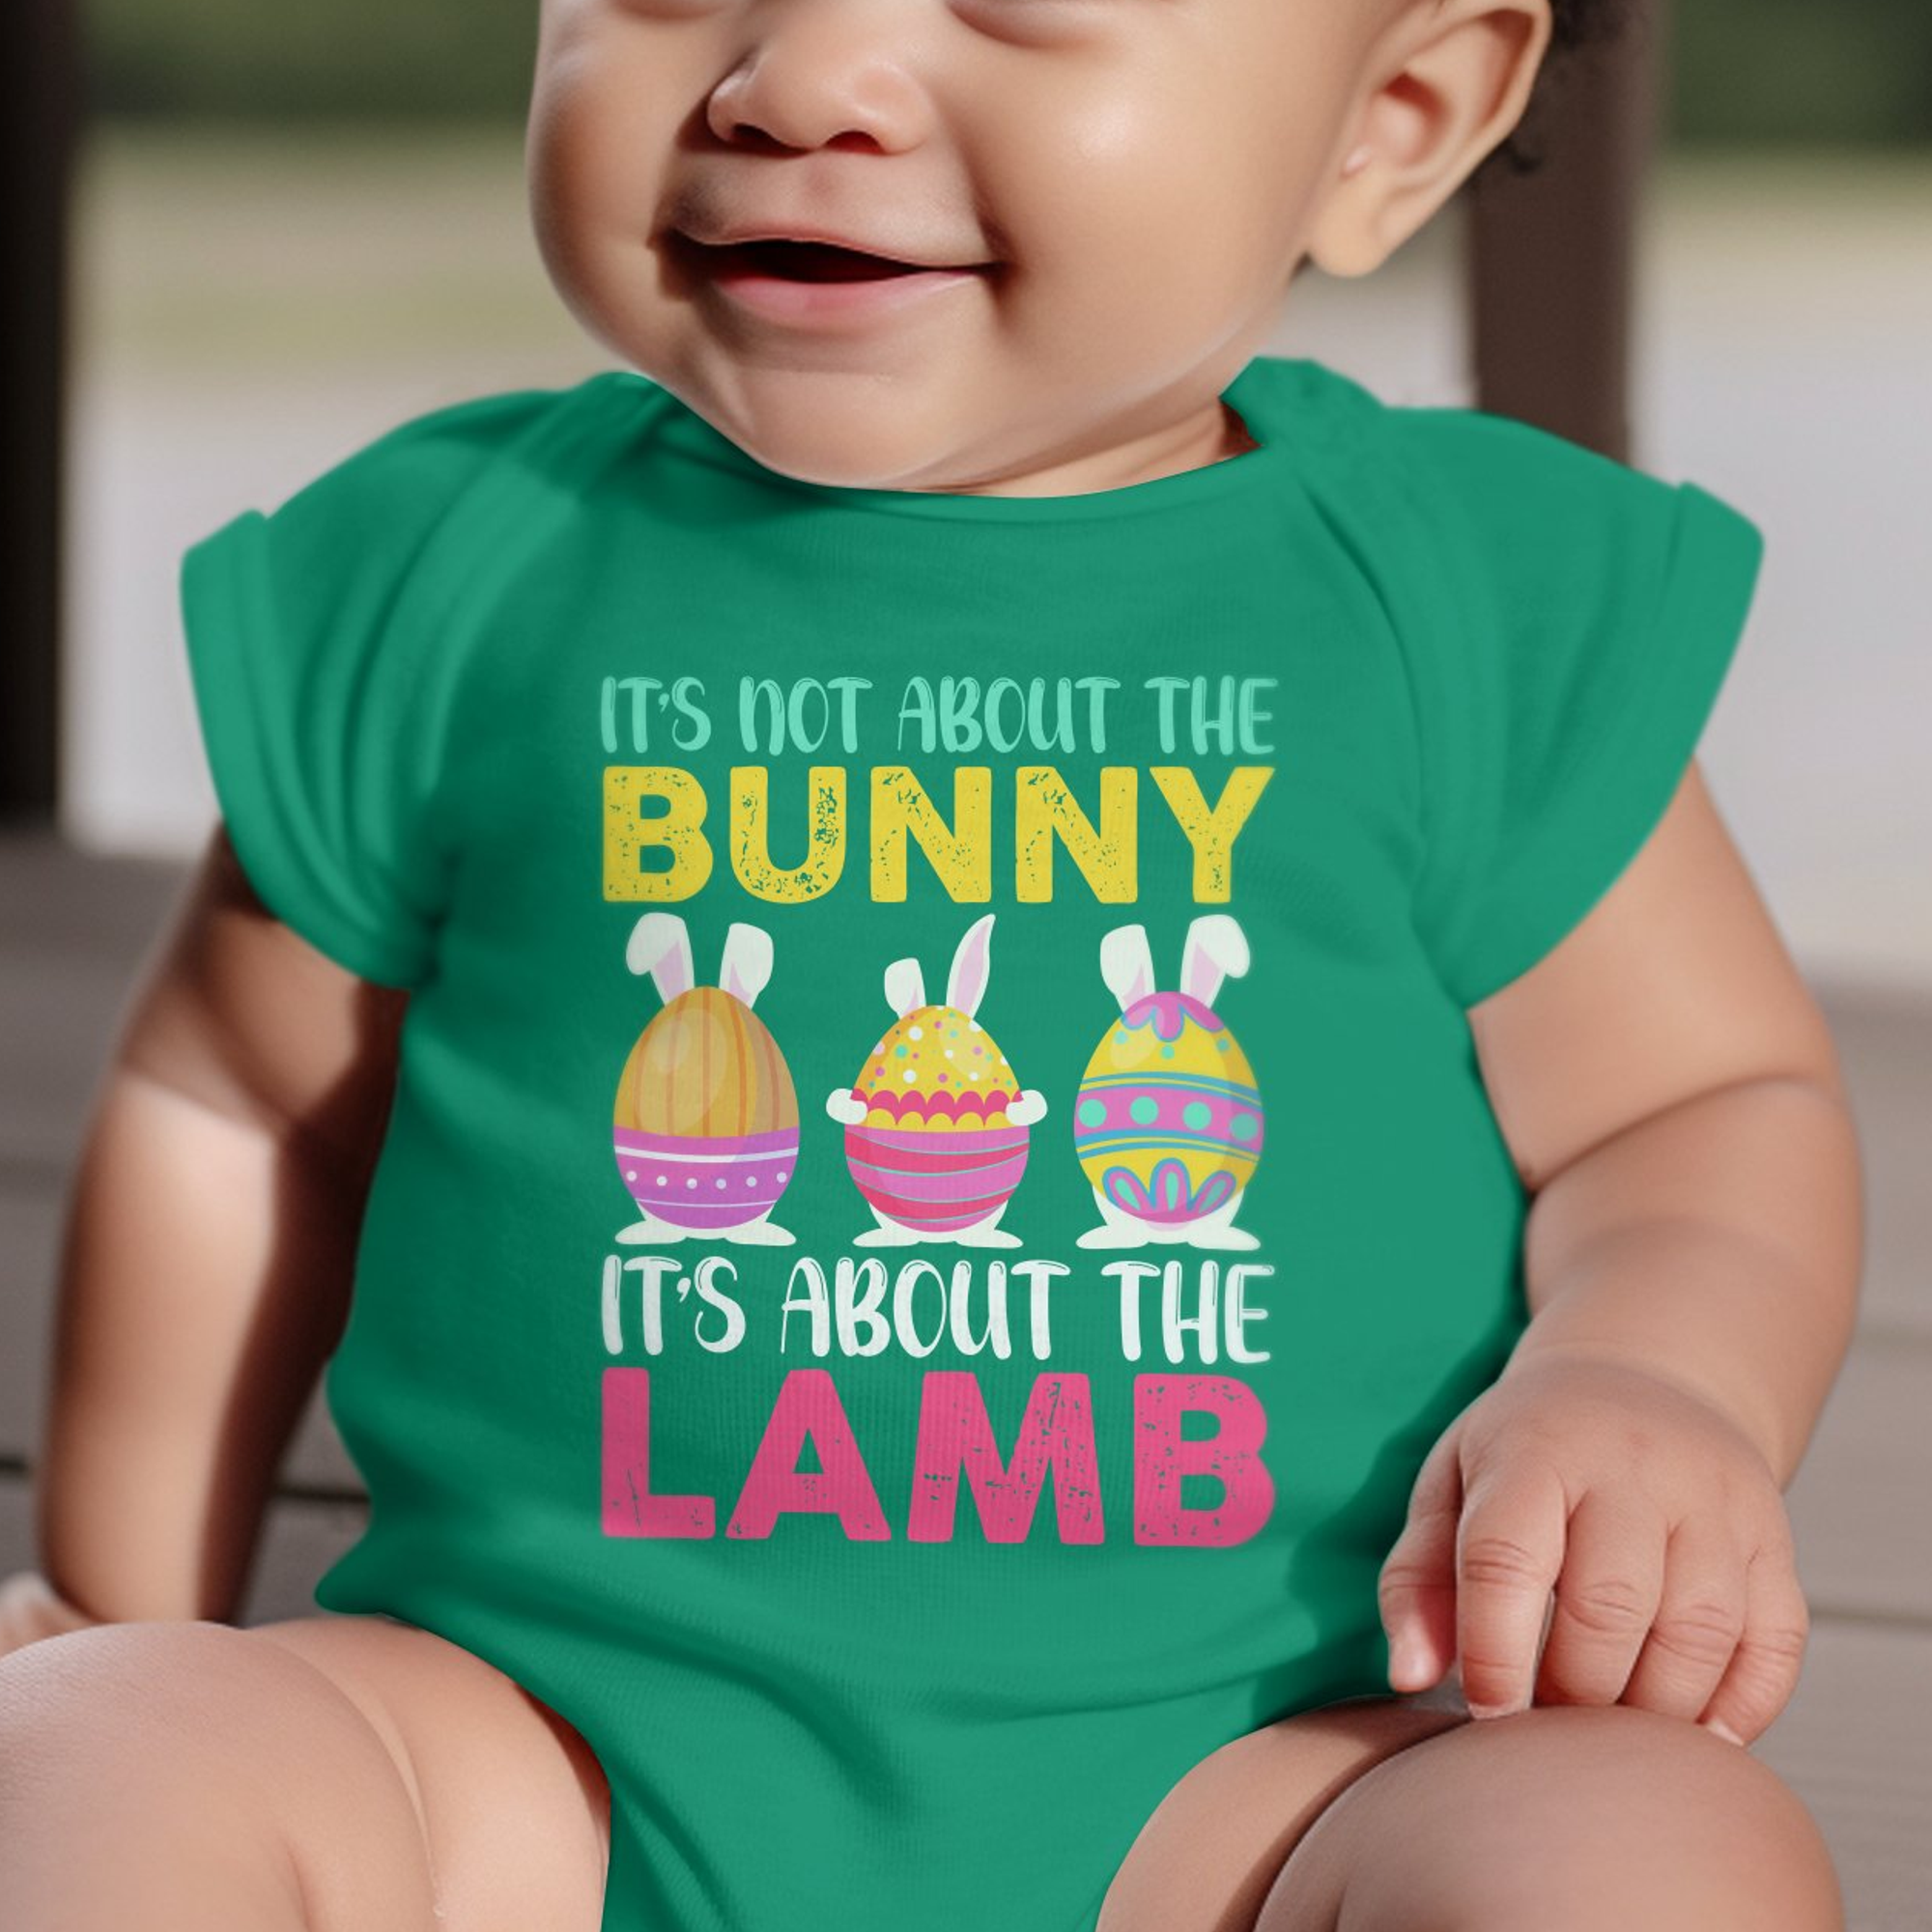 About the Lamb Infant Fine Jersey Bodysuit Size: 18mo Color: Navy Jesus Passion Apparel